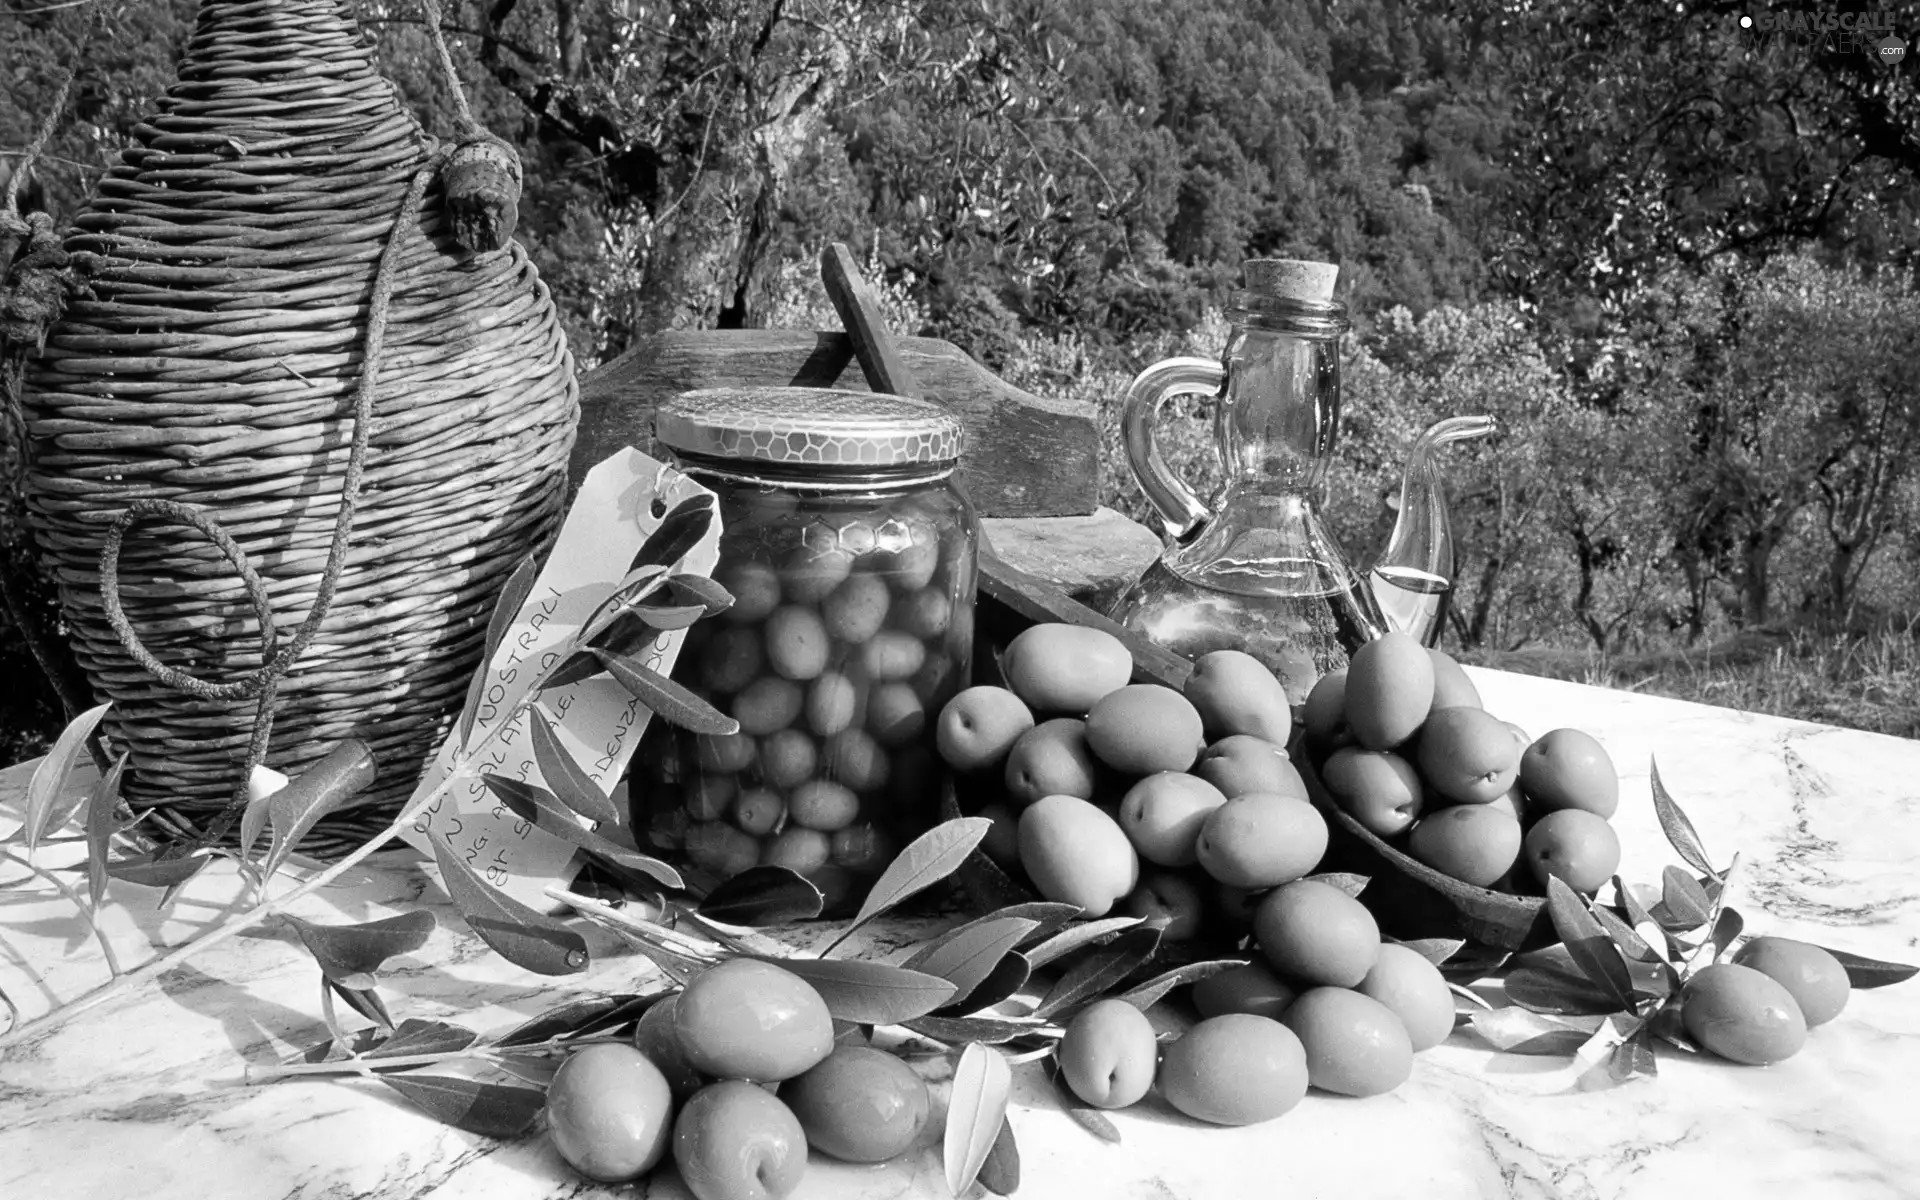 Preparations, olives, oil